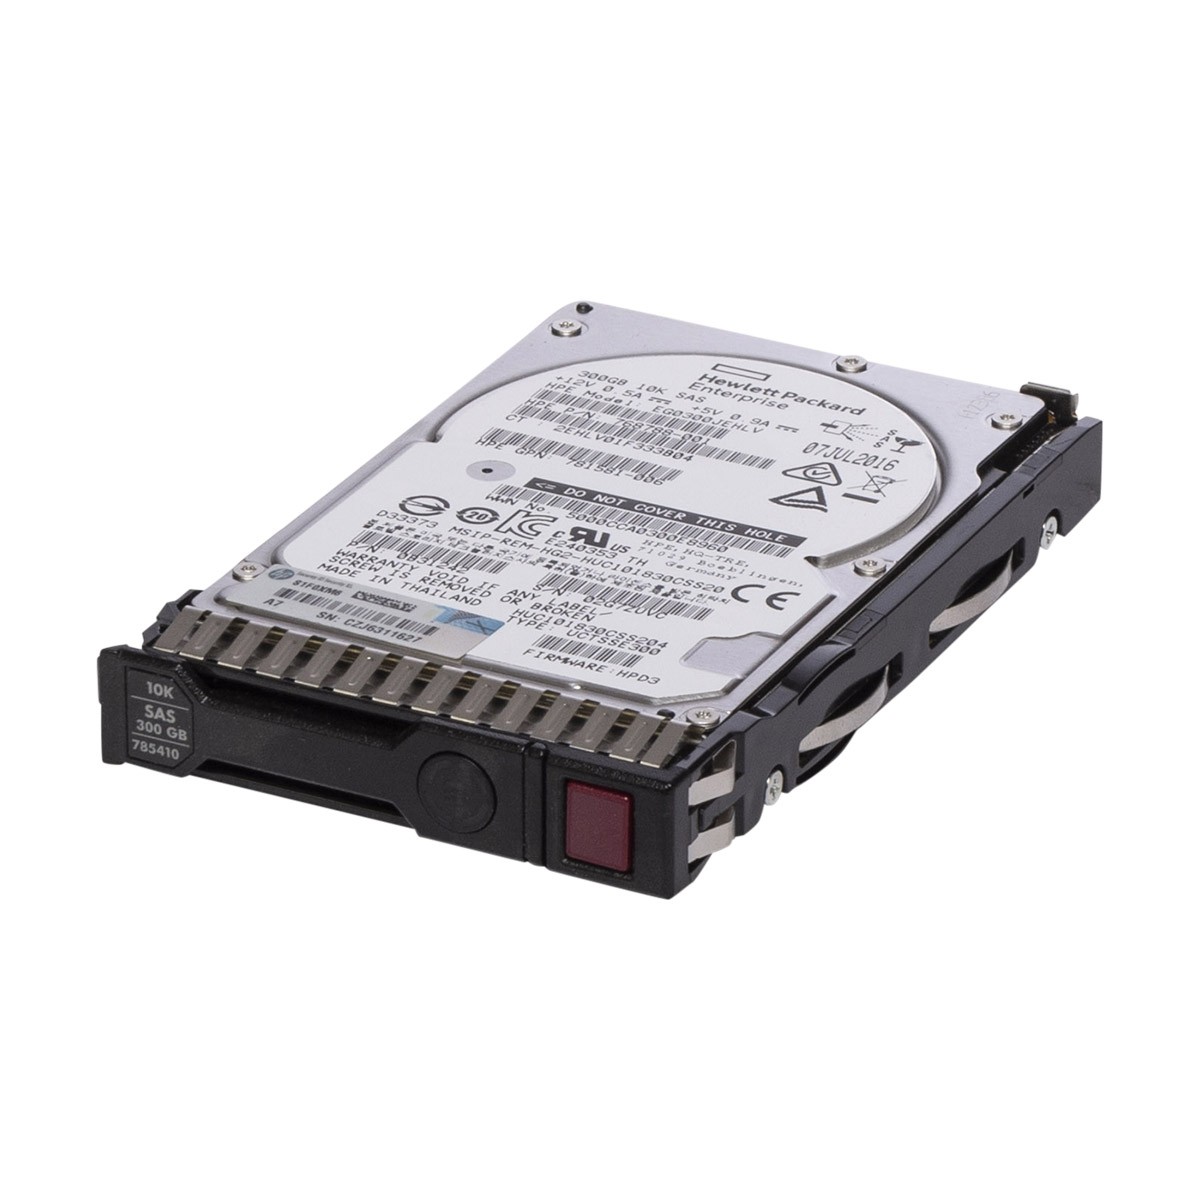 HP 785410-001 300GB 10K 2.5" SAS HOTPLUG HDD